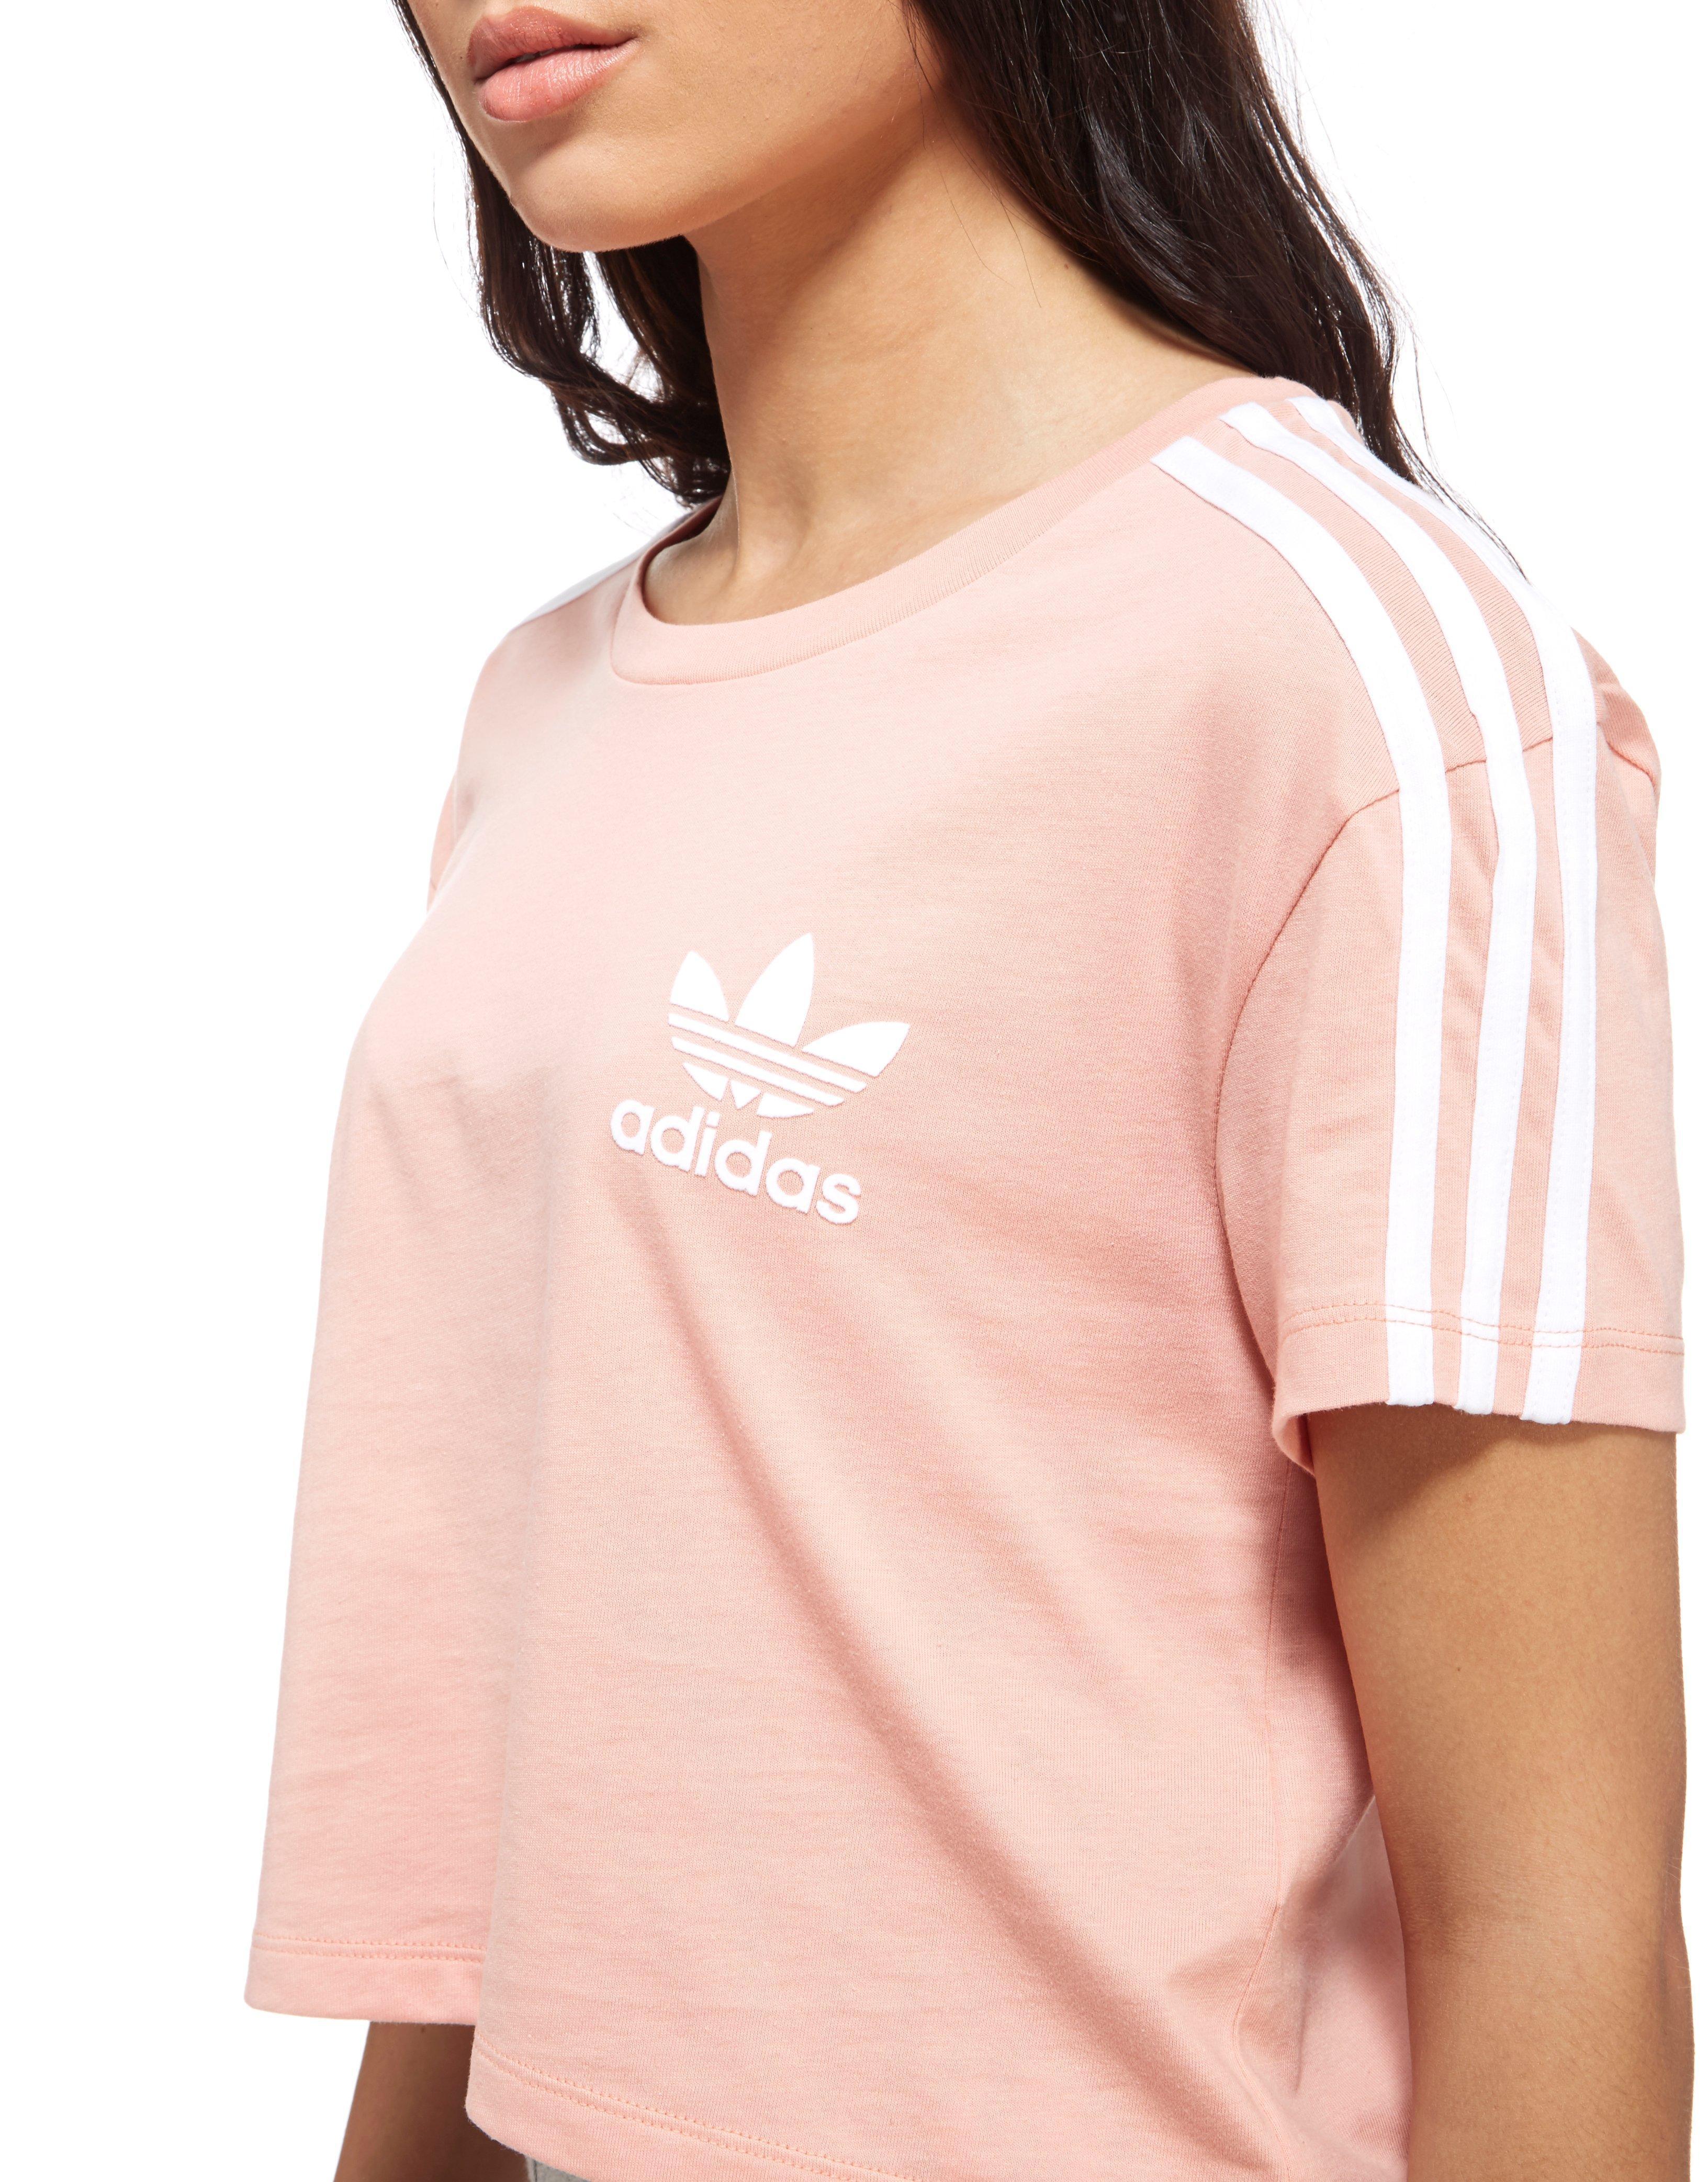 Adidas California Pink Hotsell, 58% OFF | sportsregras.com